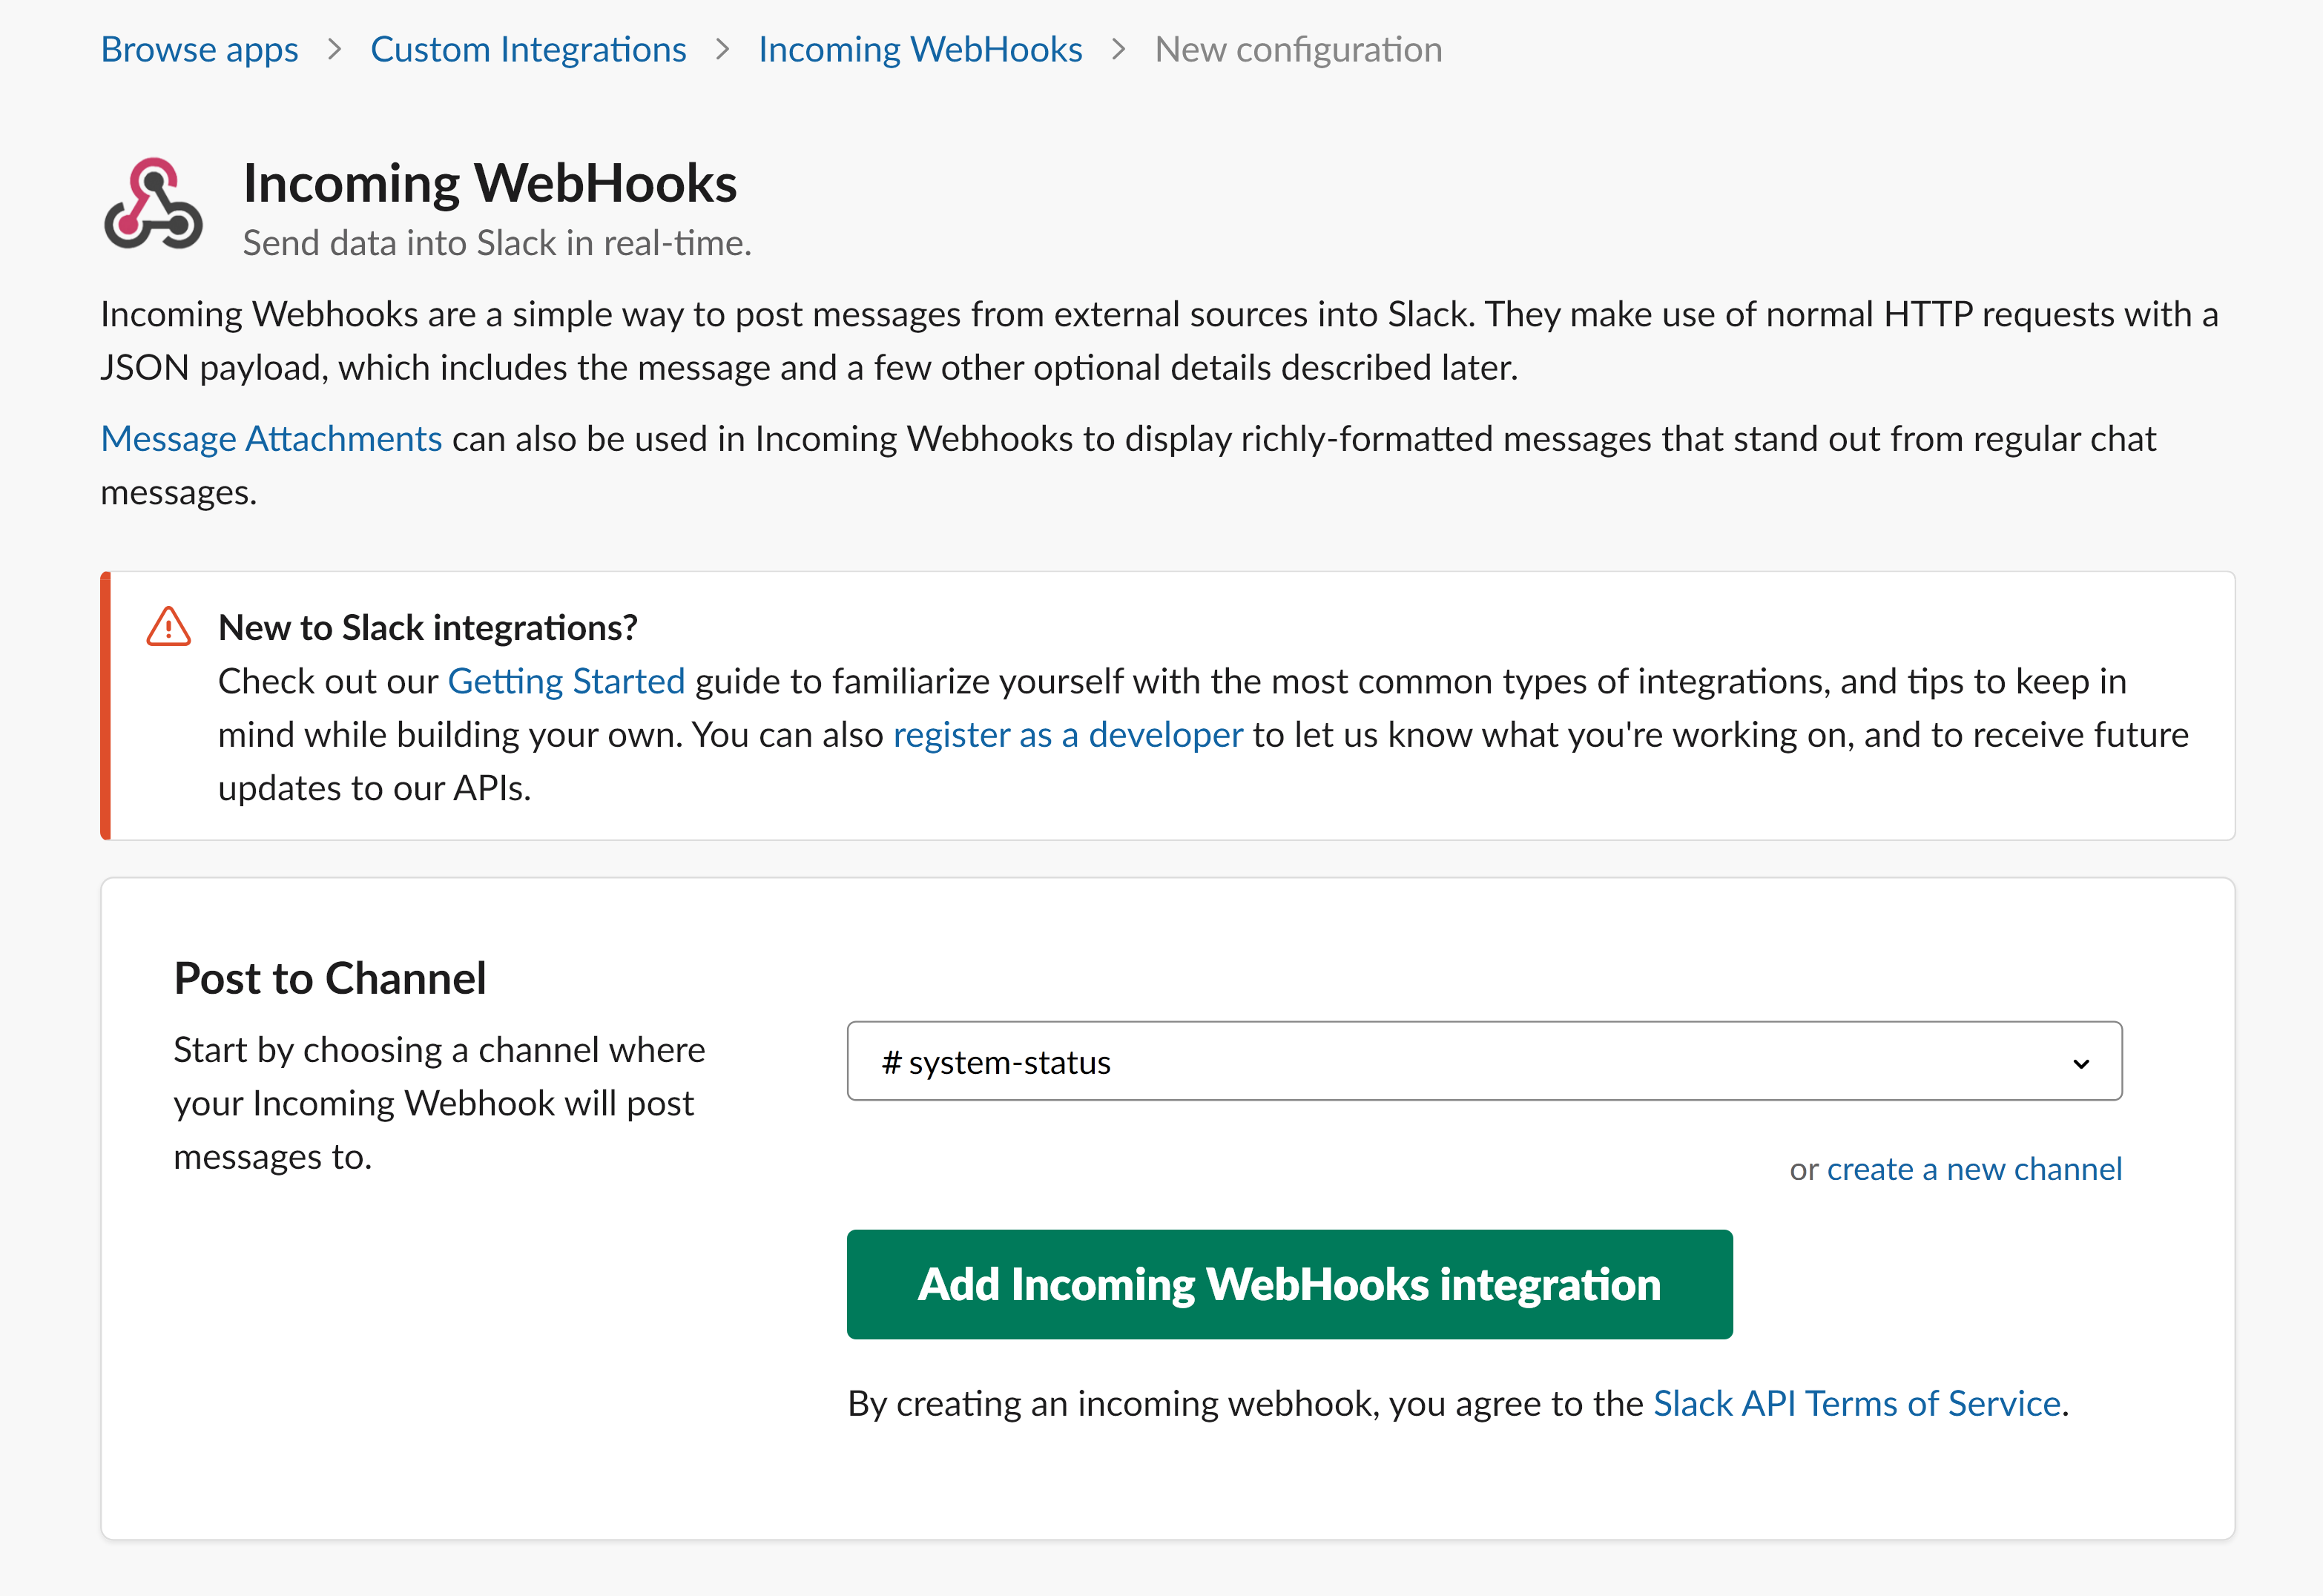 Configure Incoming WebHooks